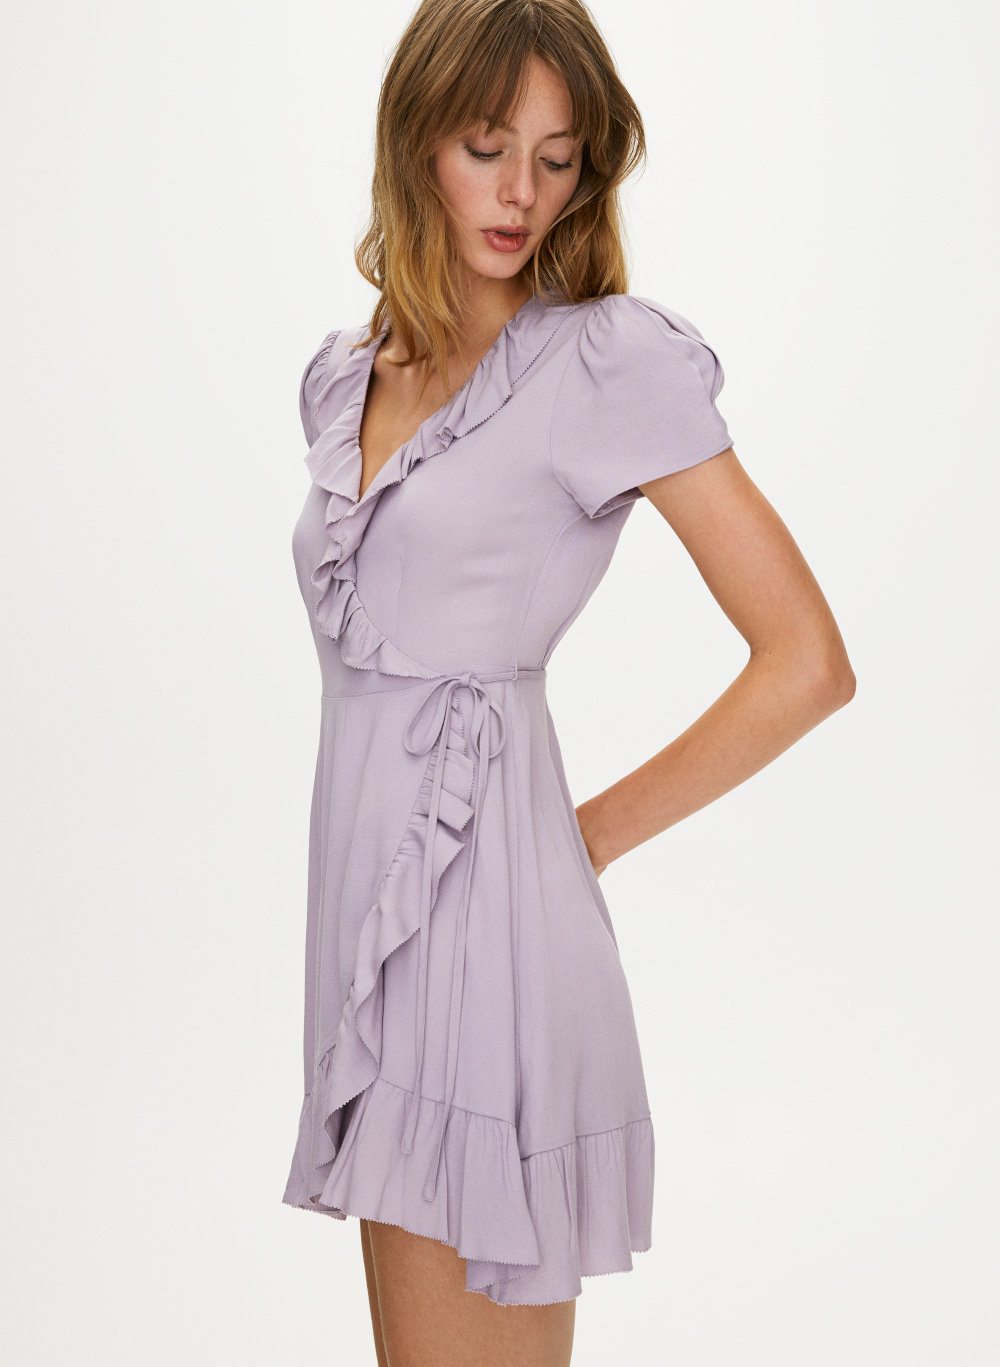 Ruffle Wrap Dress Mini Online Store, UP ...